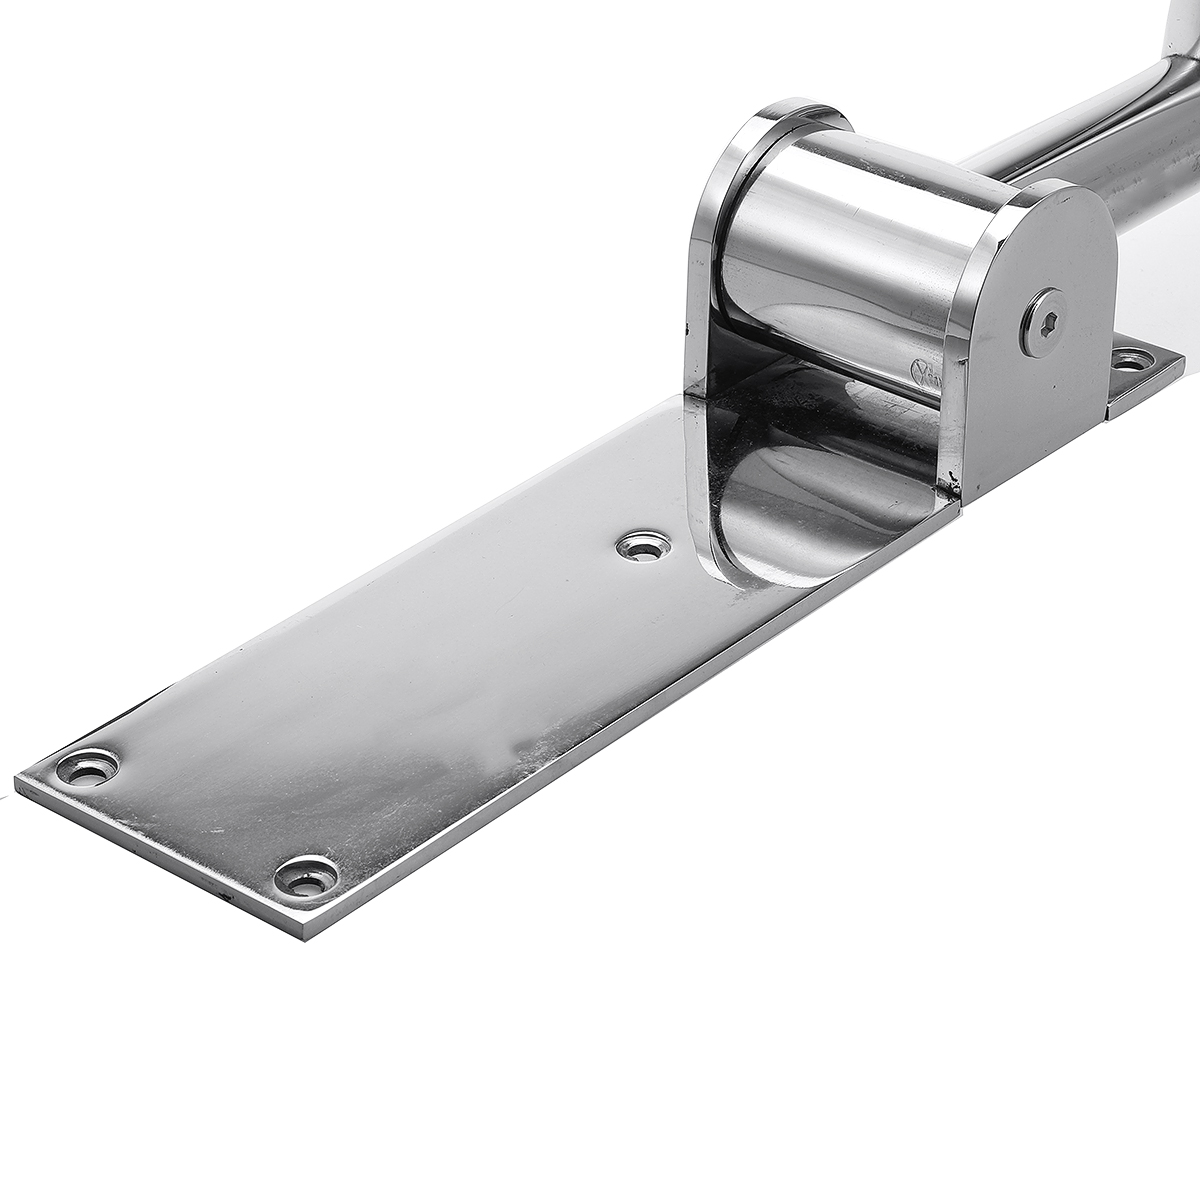 Stainless-Steel-Toilet-Safety-Frame-Rail-Grab-Bar-Handicap-Bathroom-Hand-Grips-1650108-8